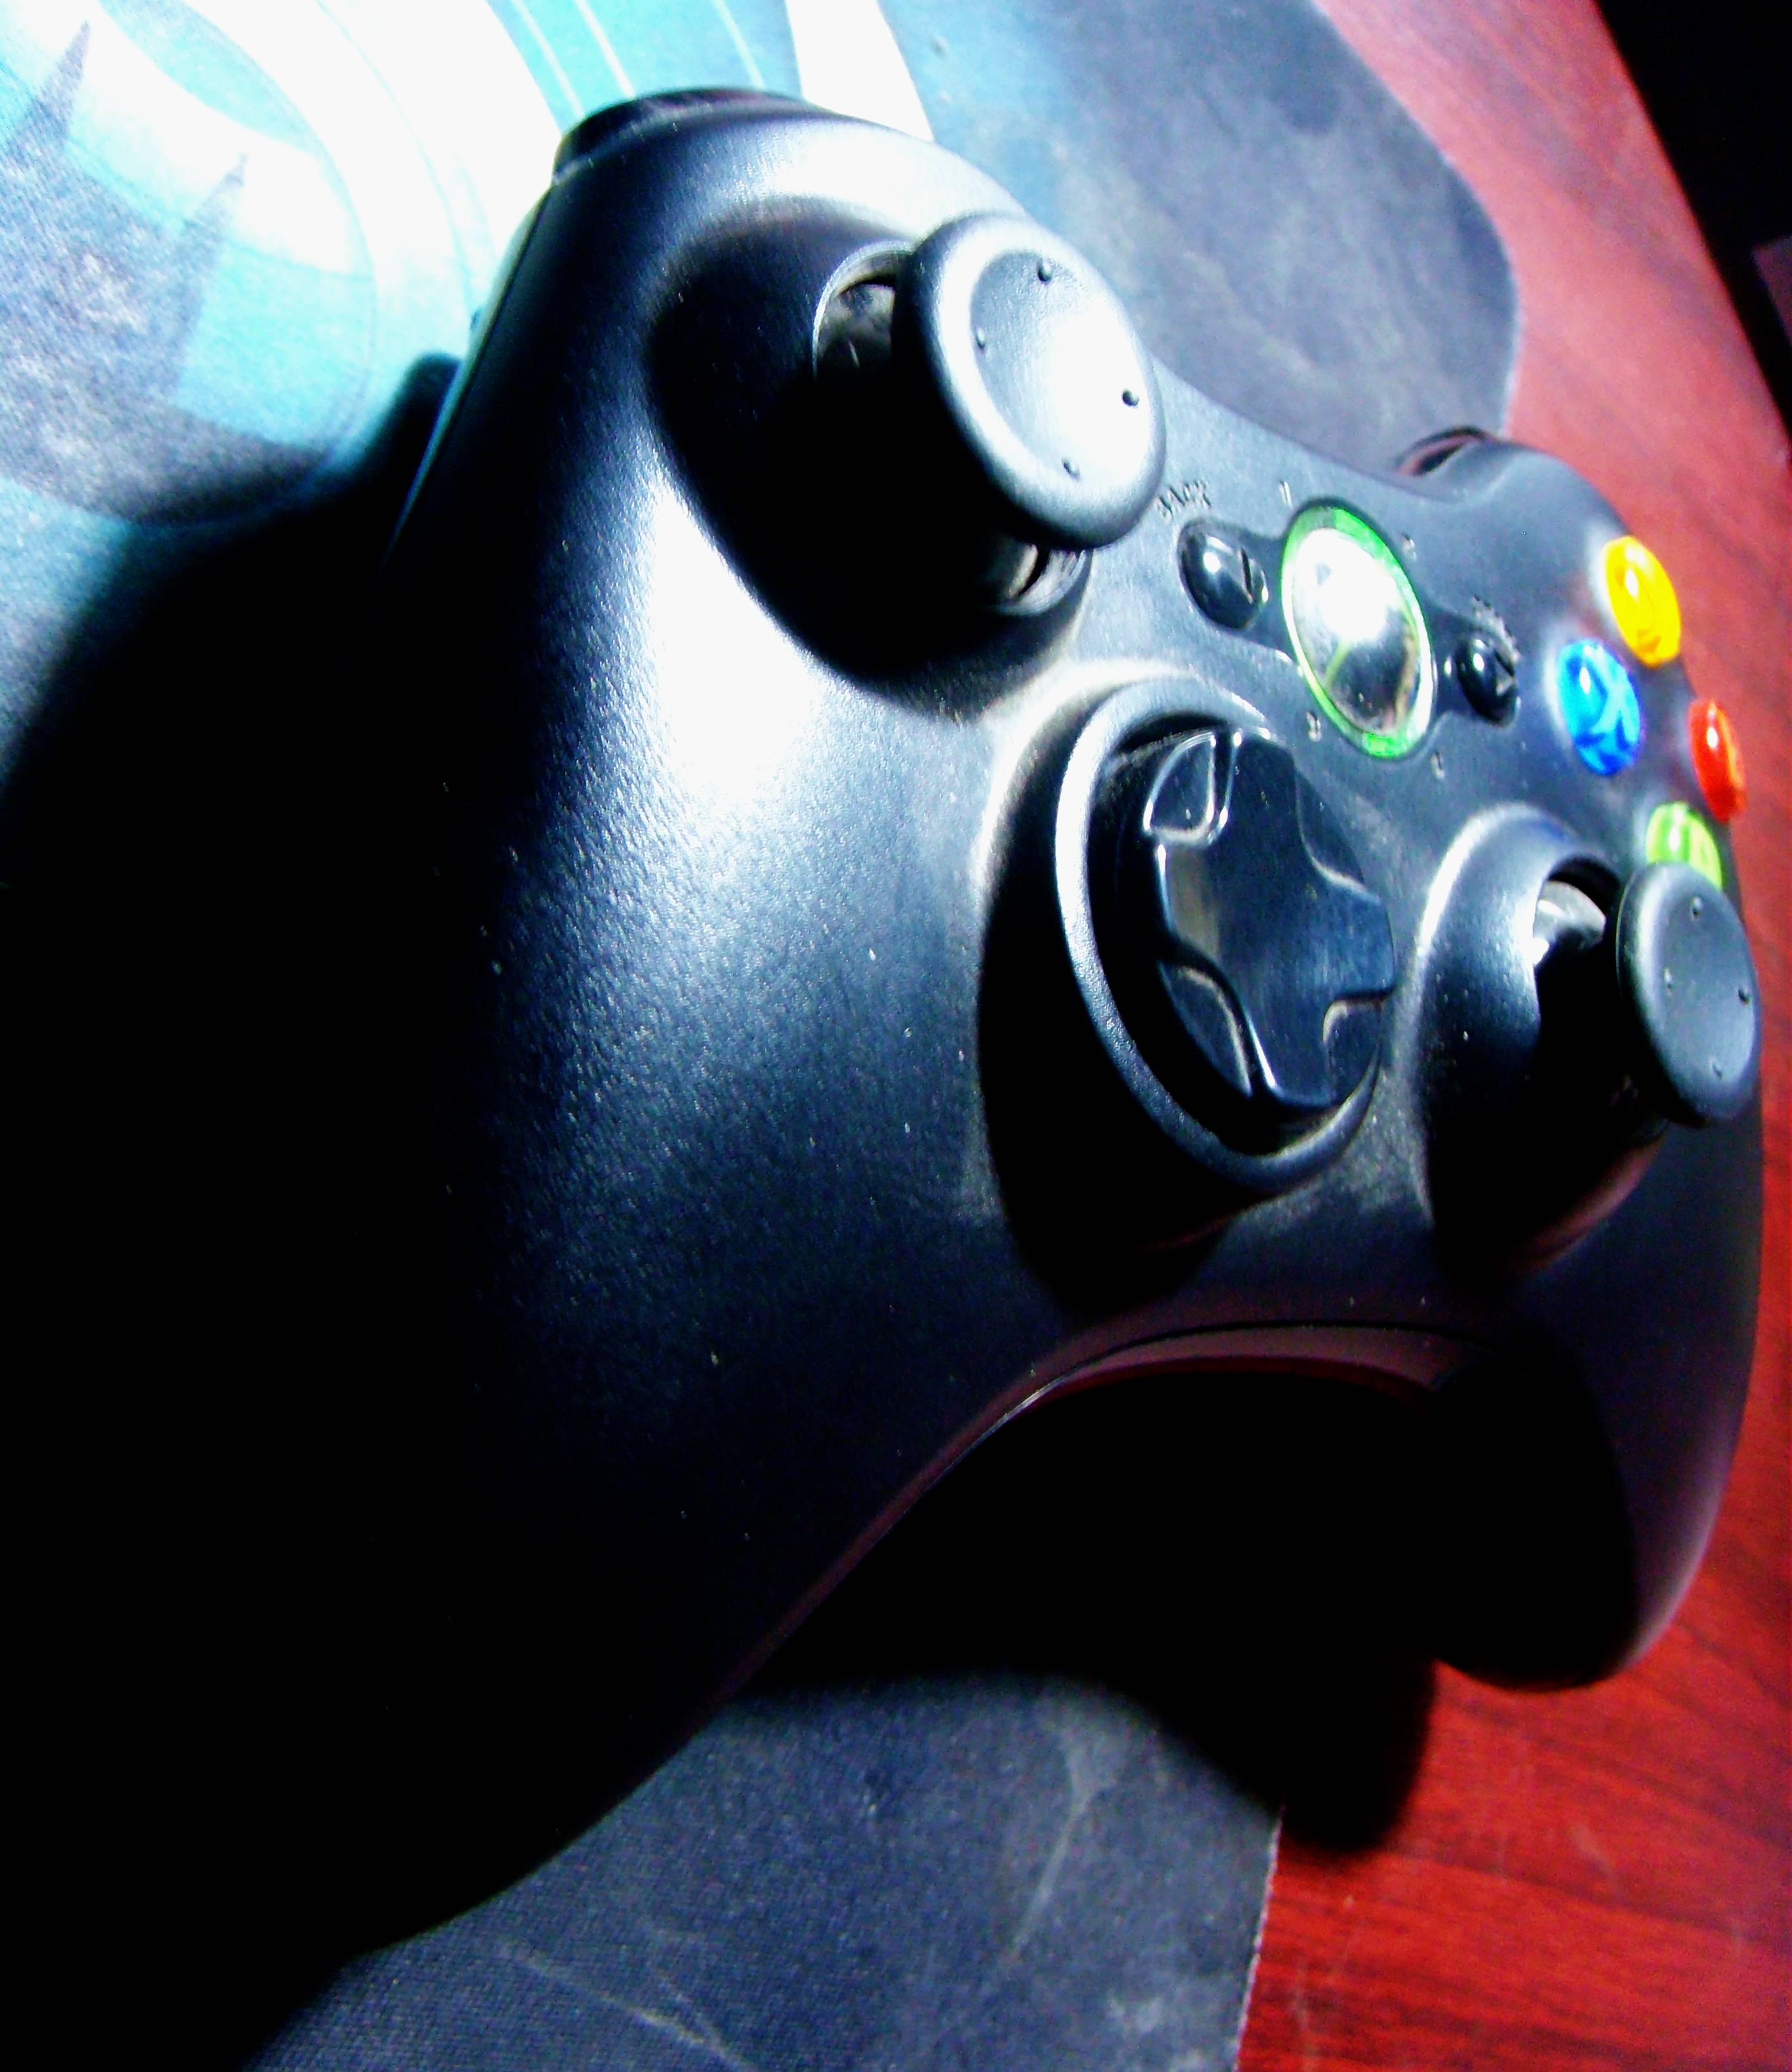 Xbox 360 Wireless Controller Black  large image 0